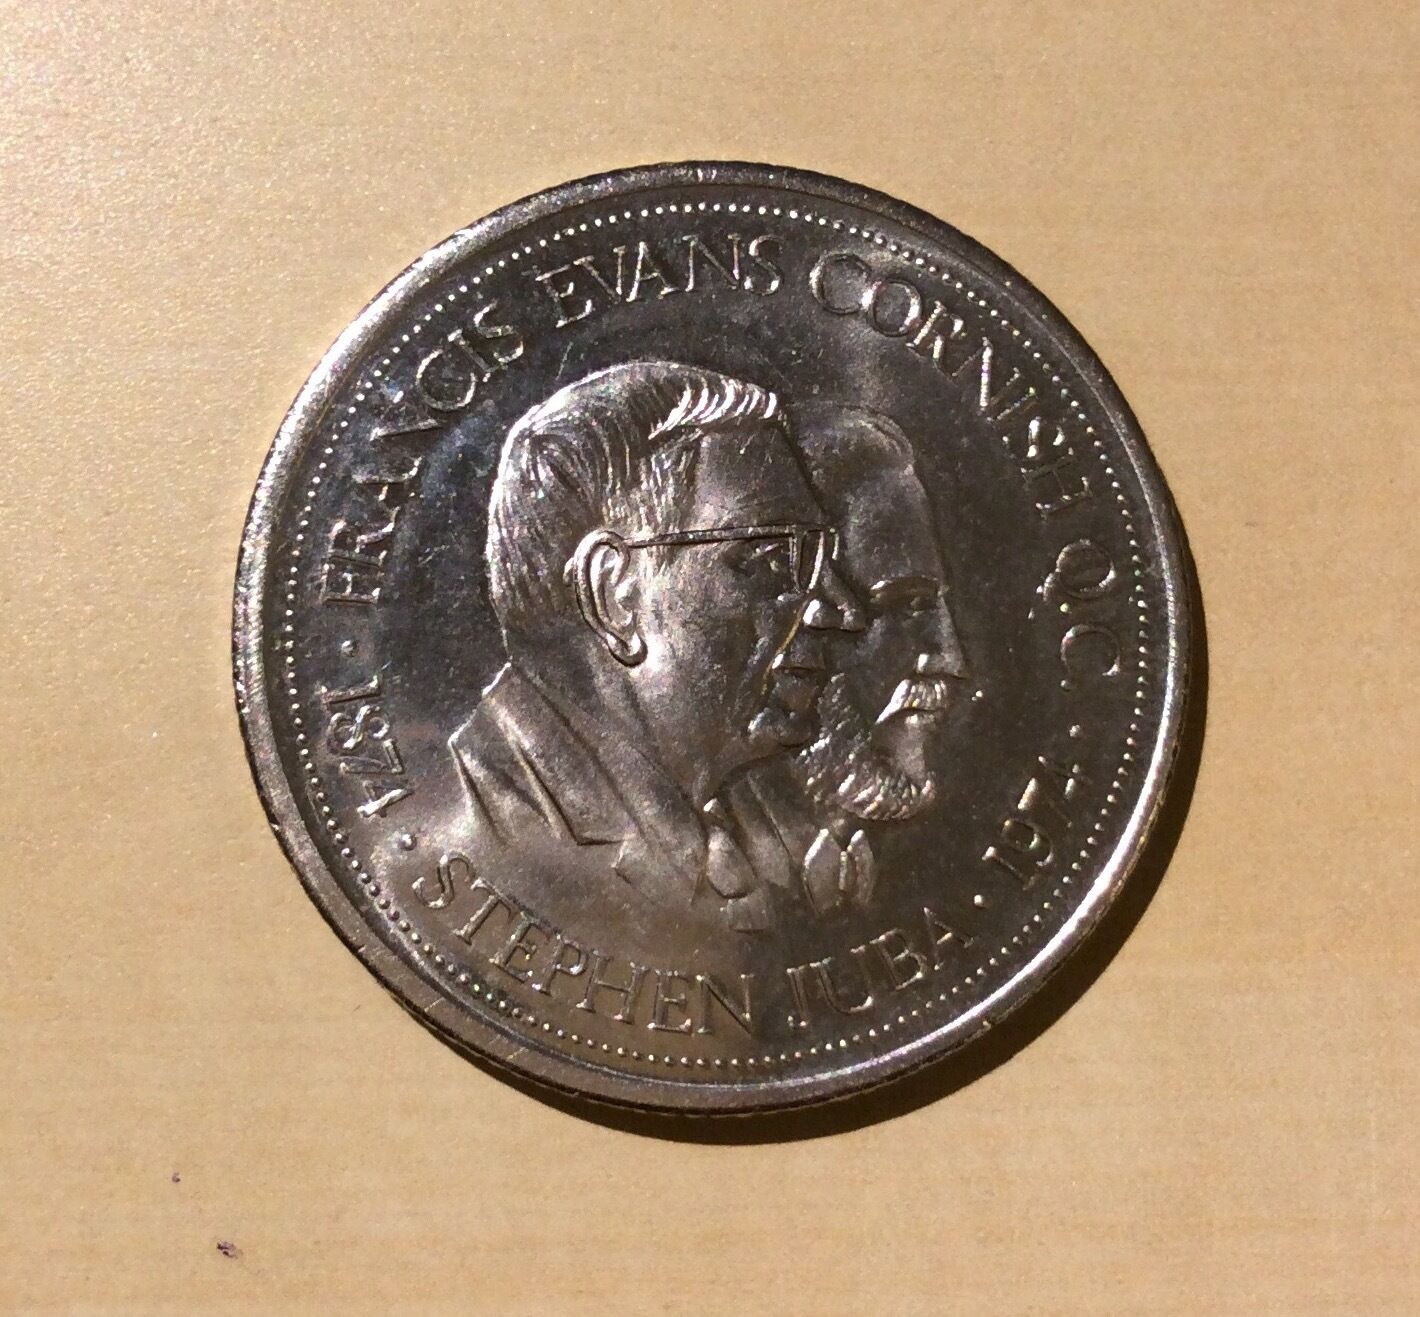 Winnipeg Centennial Dollar 1874 - 1974 Francis Cornish And Stephen Juba